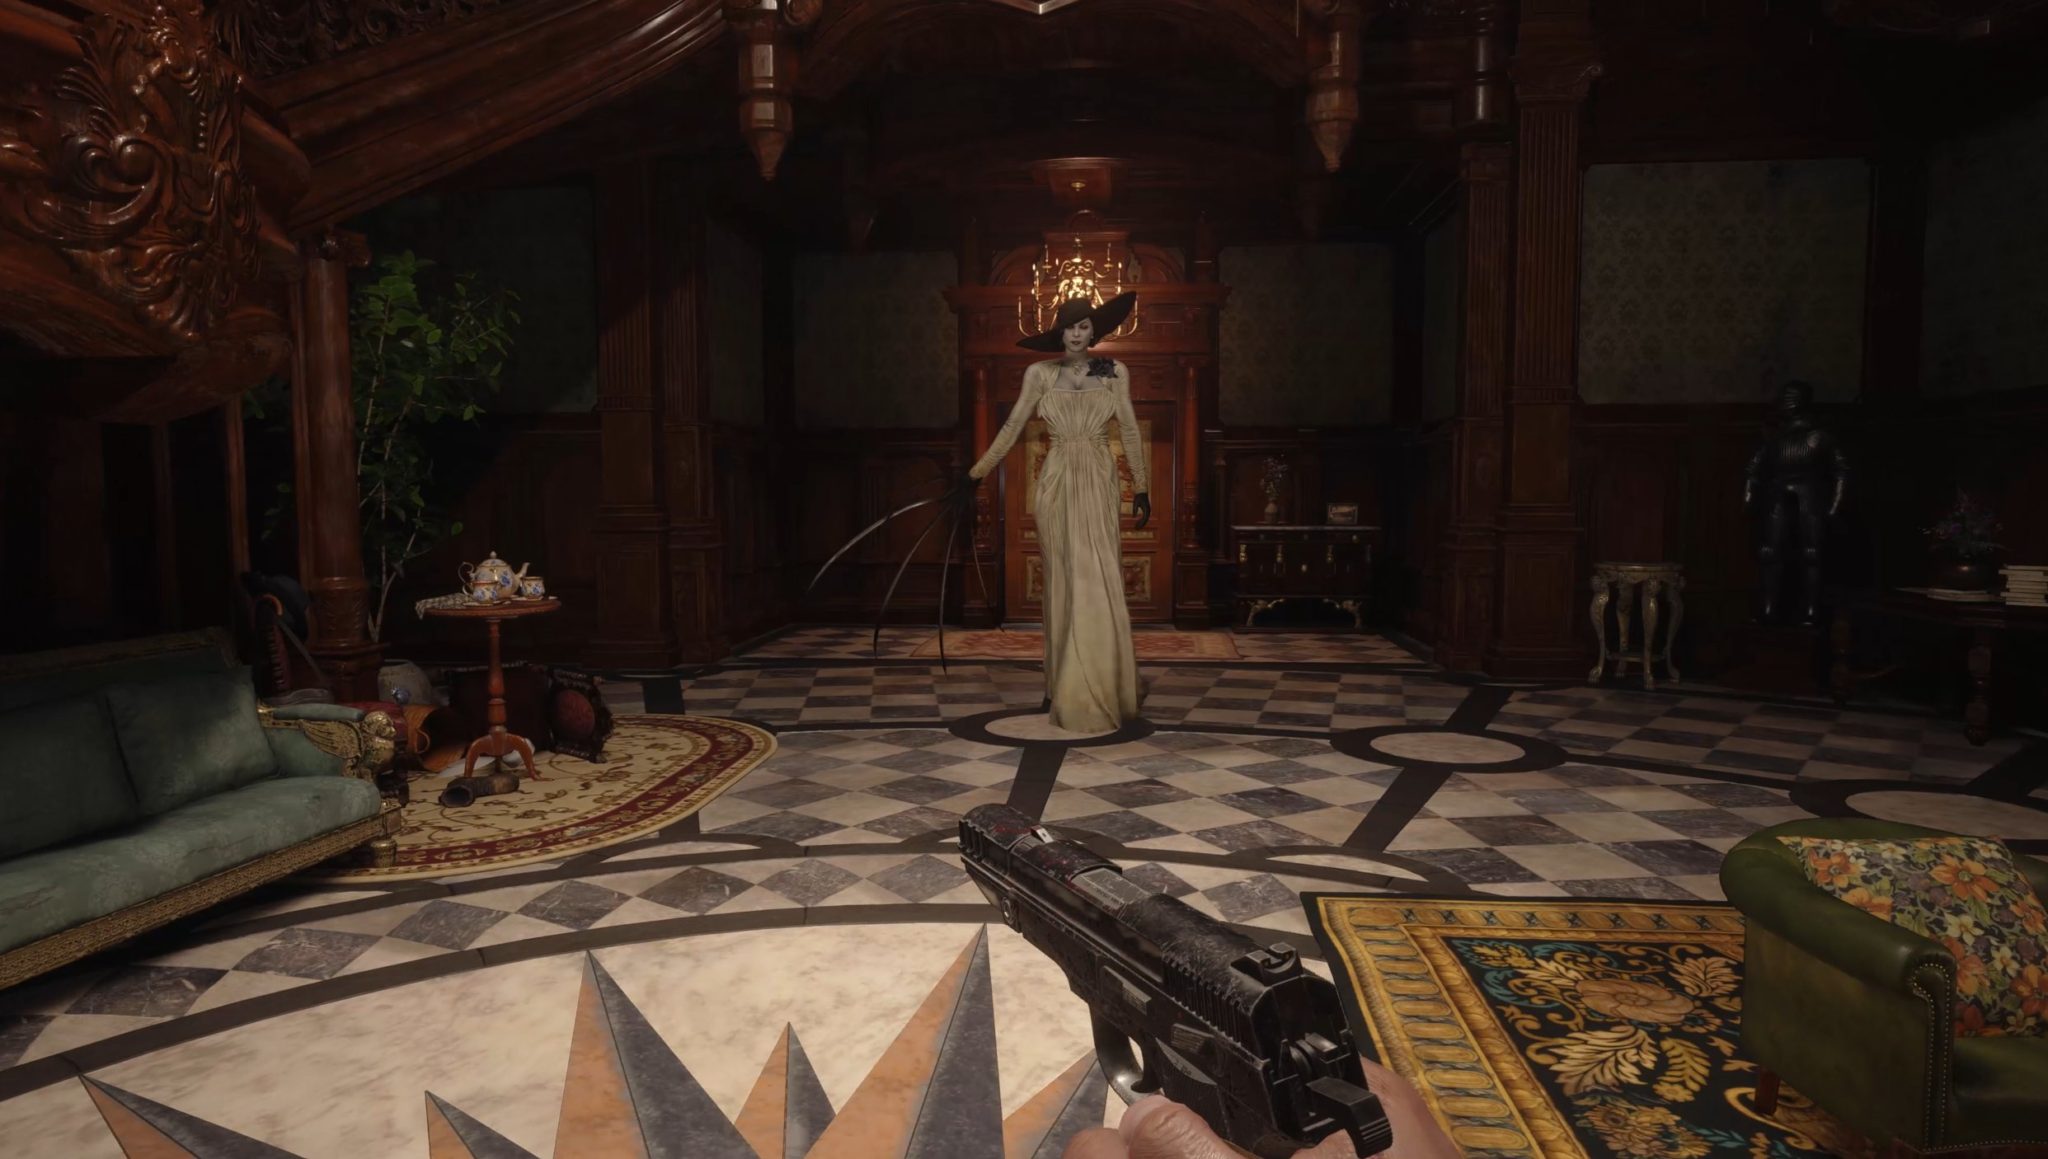 Resident Evil Village: Lady Dimitrescu perseguirá os jogadores no